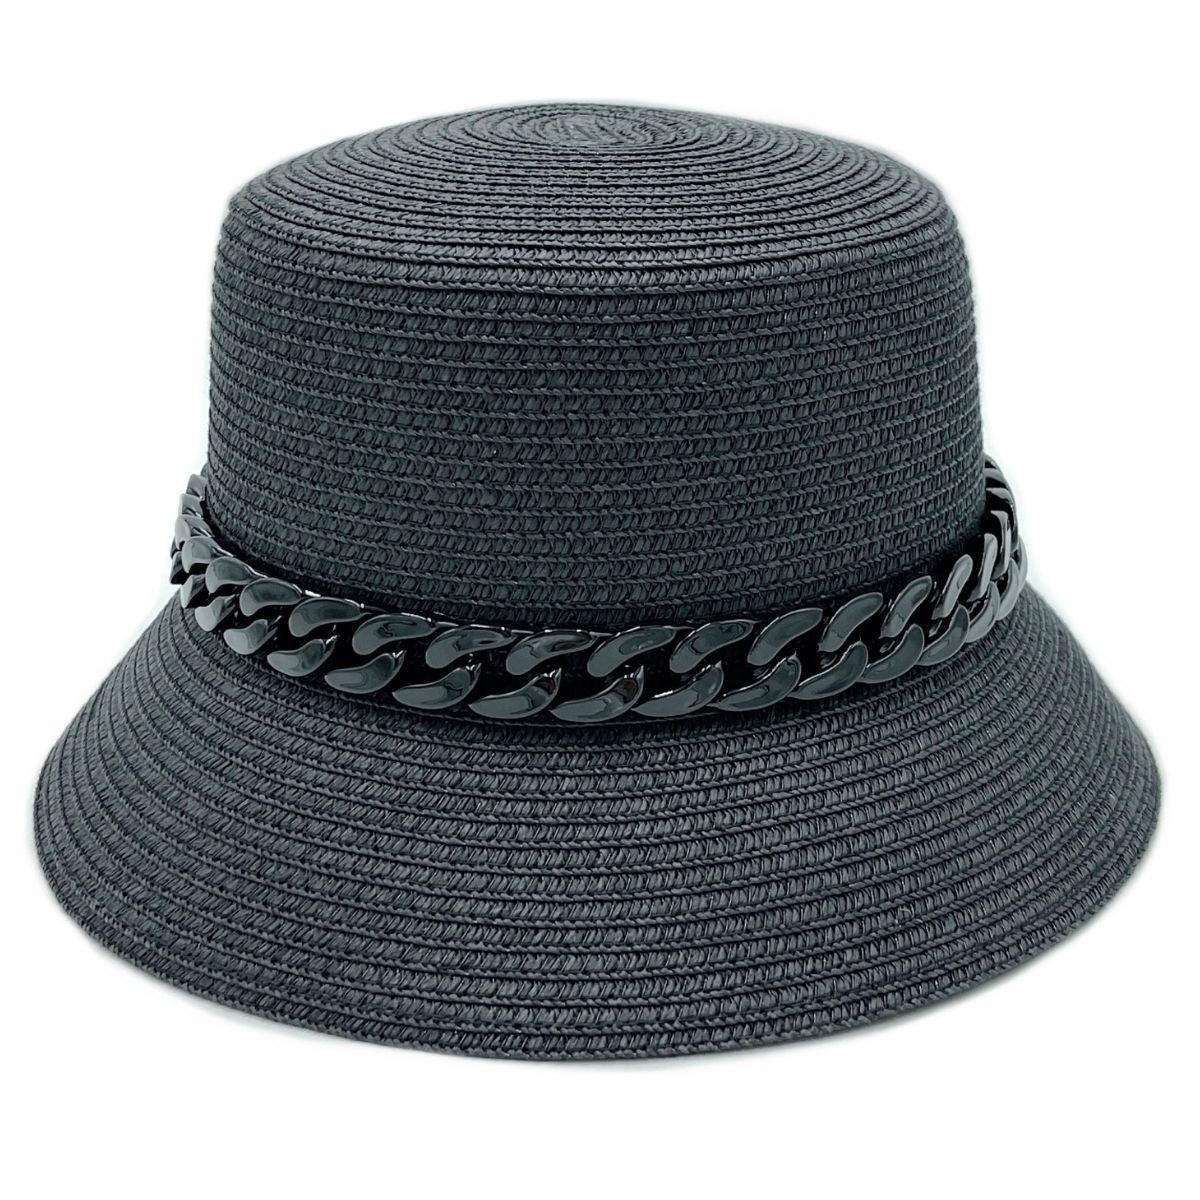 Black Chain Black Bucket Hat